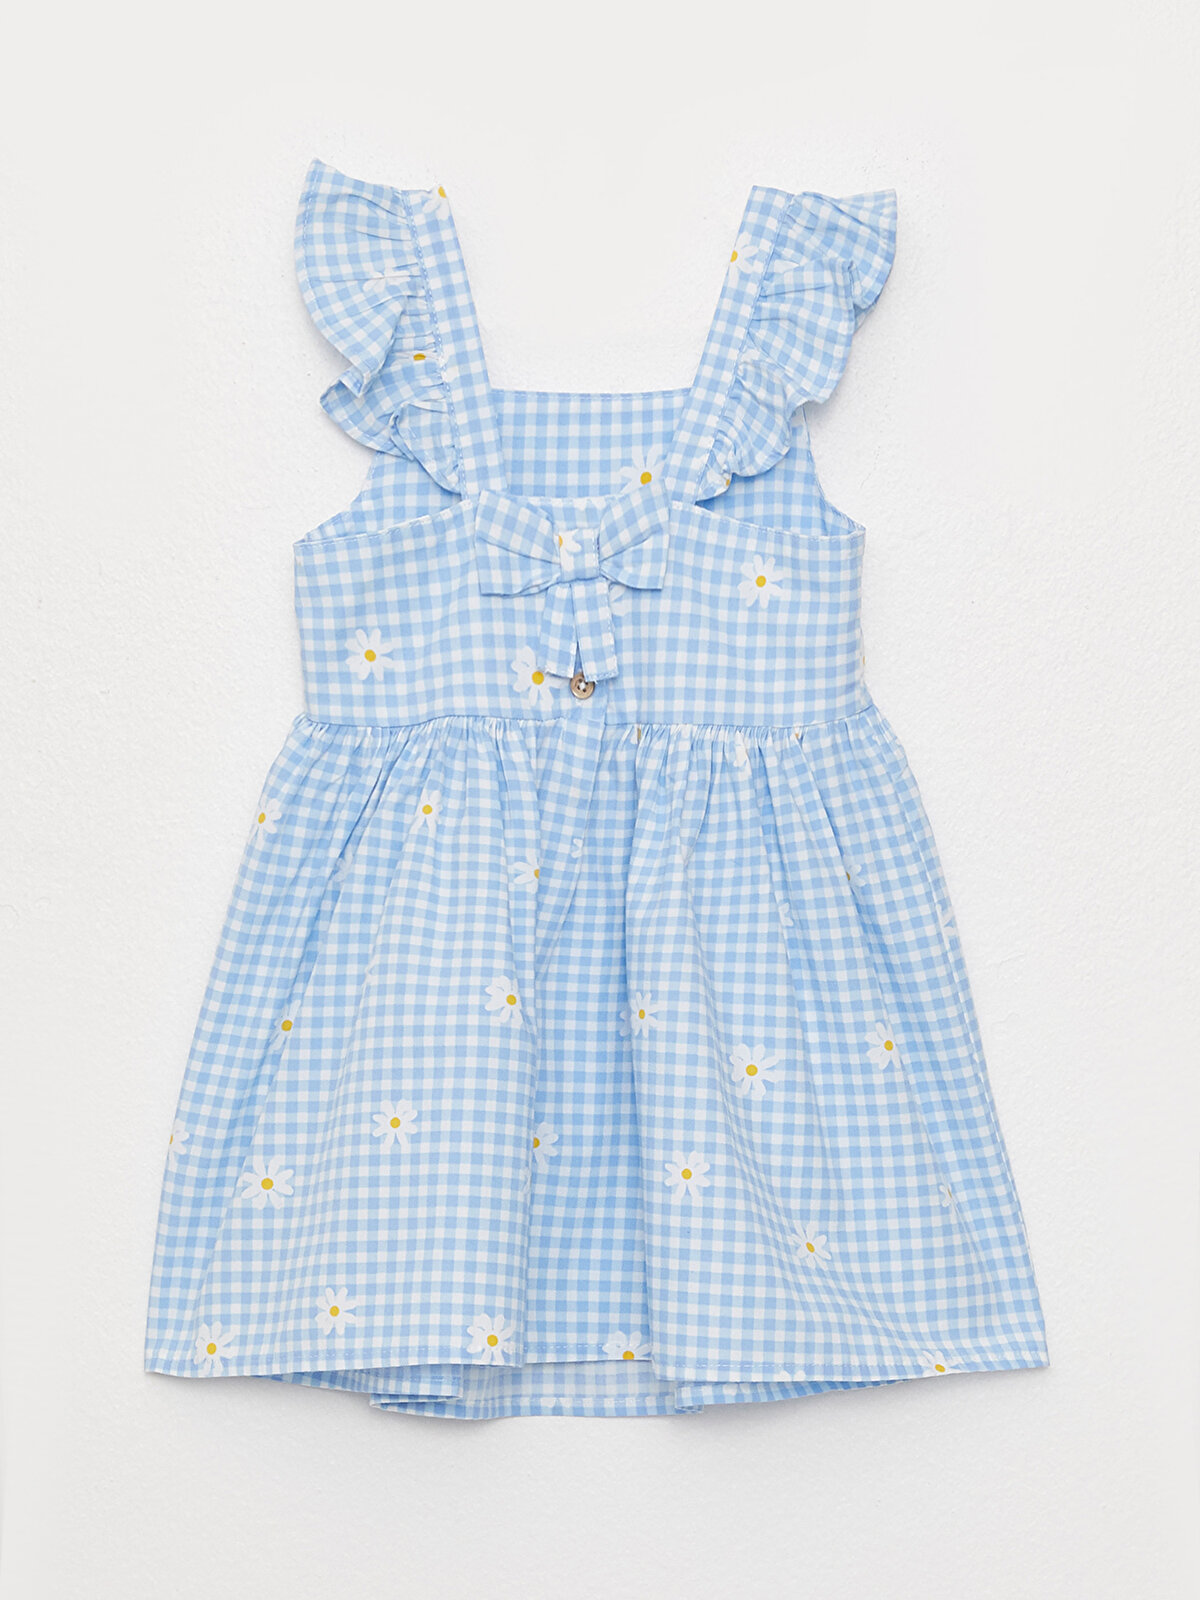 Strappy Square Neck Printed Baby Girl Dress -S34902Z1-LLC 